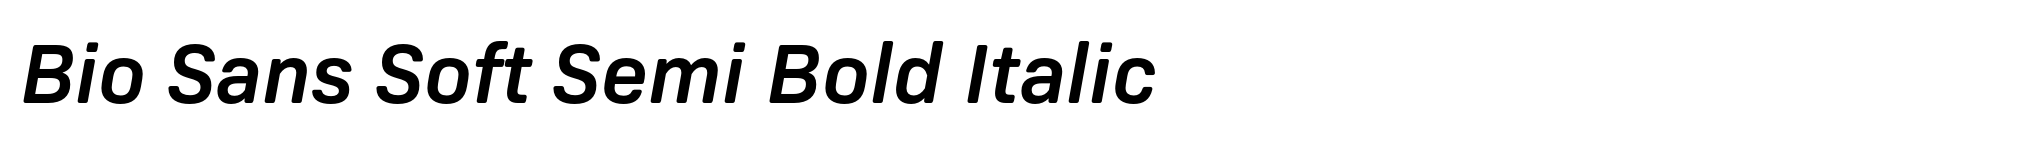 Bio Sans Soft Semi Bold Italic image